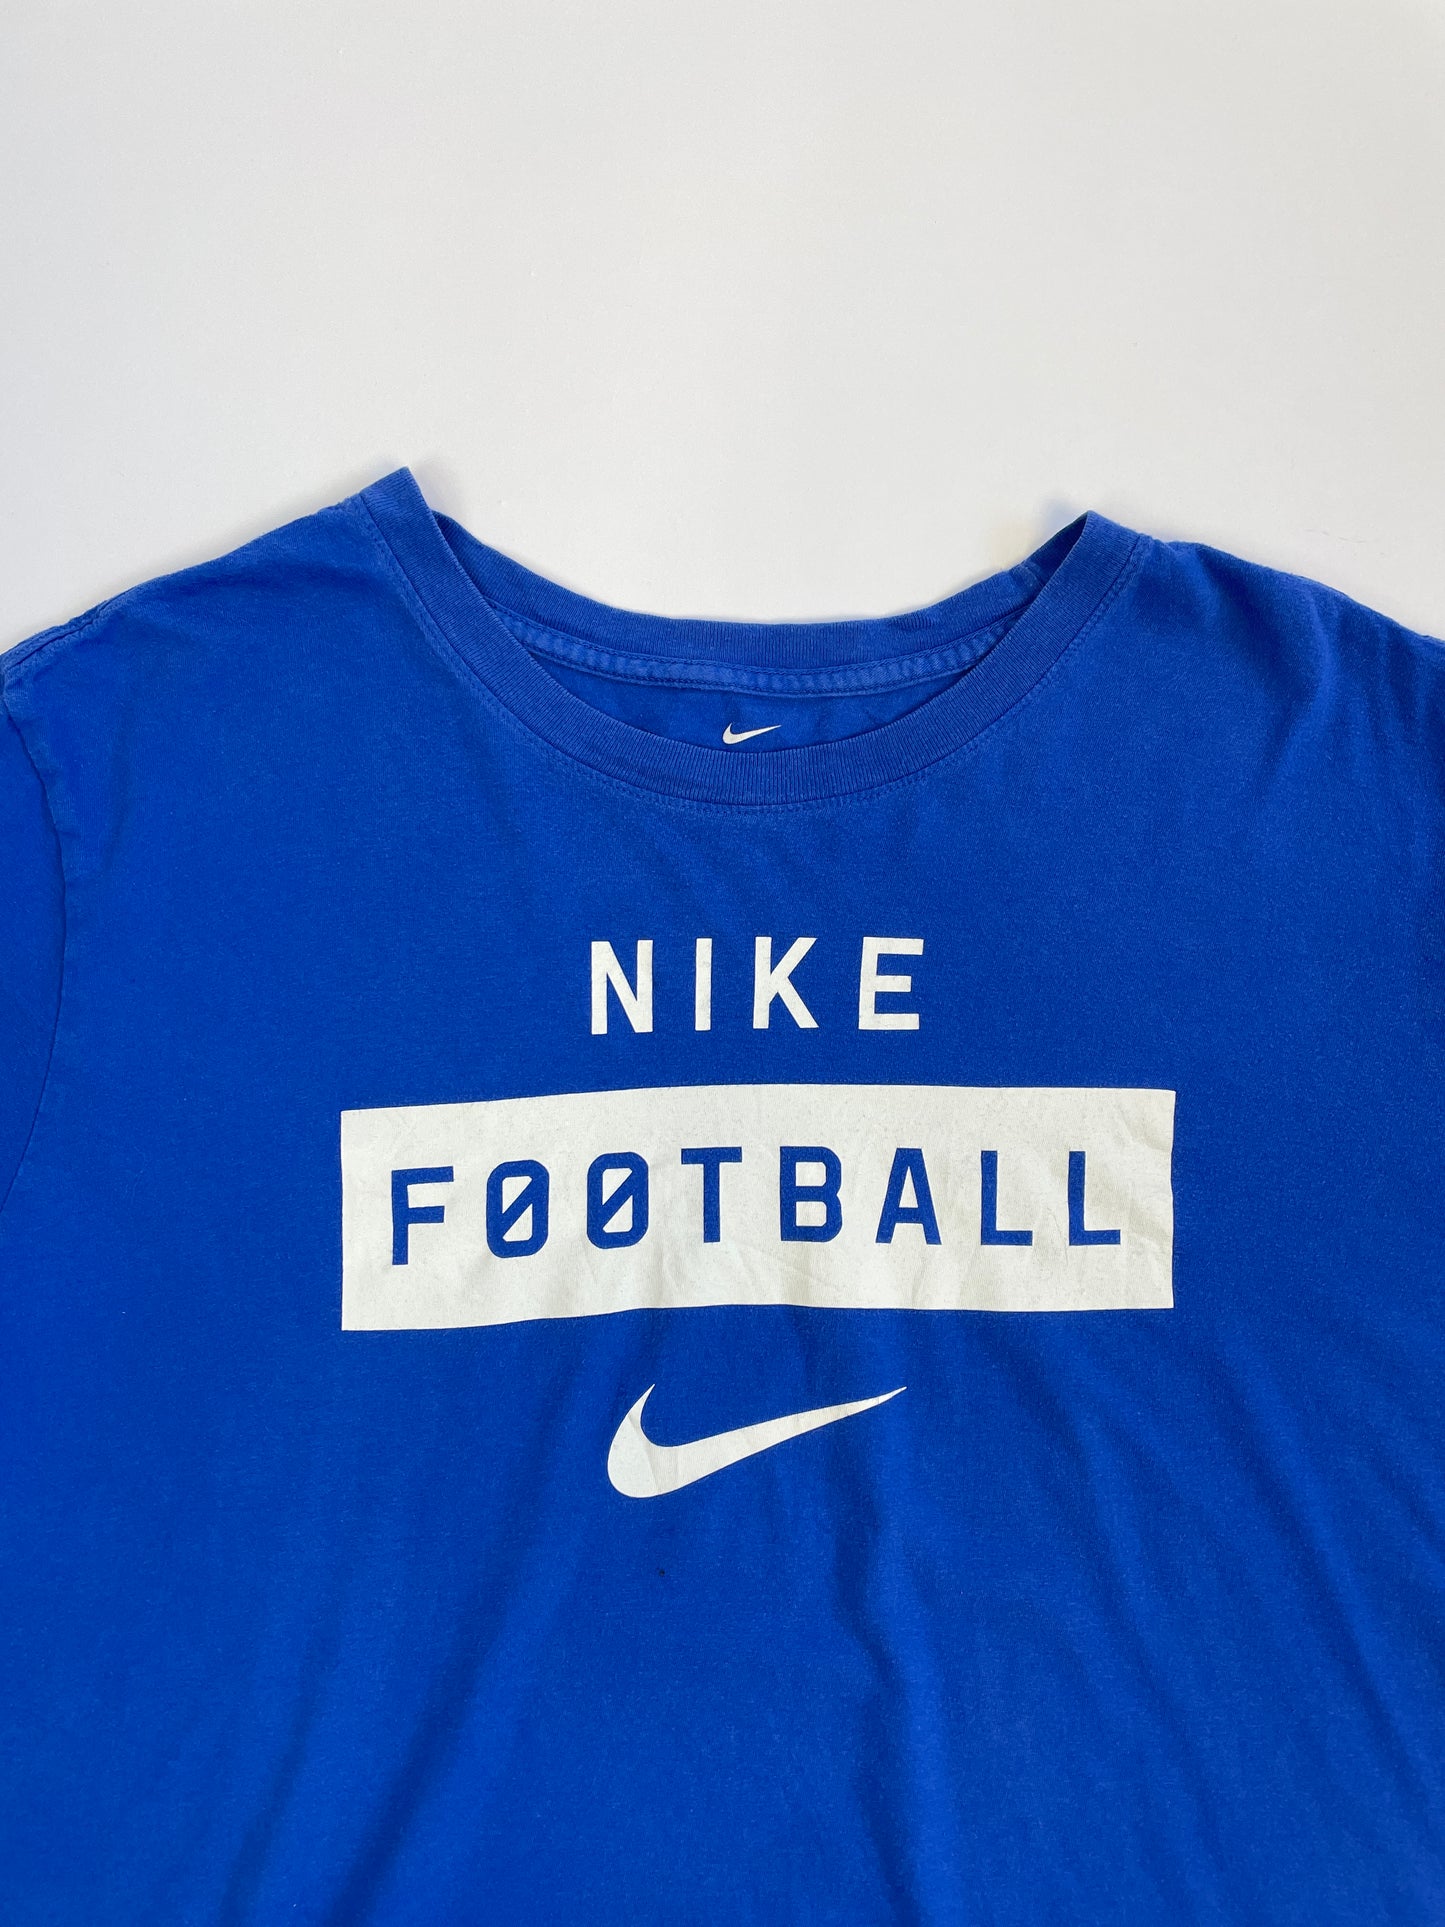 Nike Football T-shirt - XL